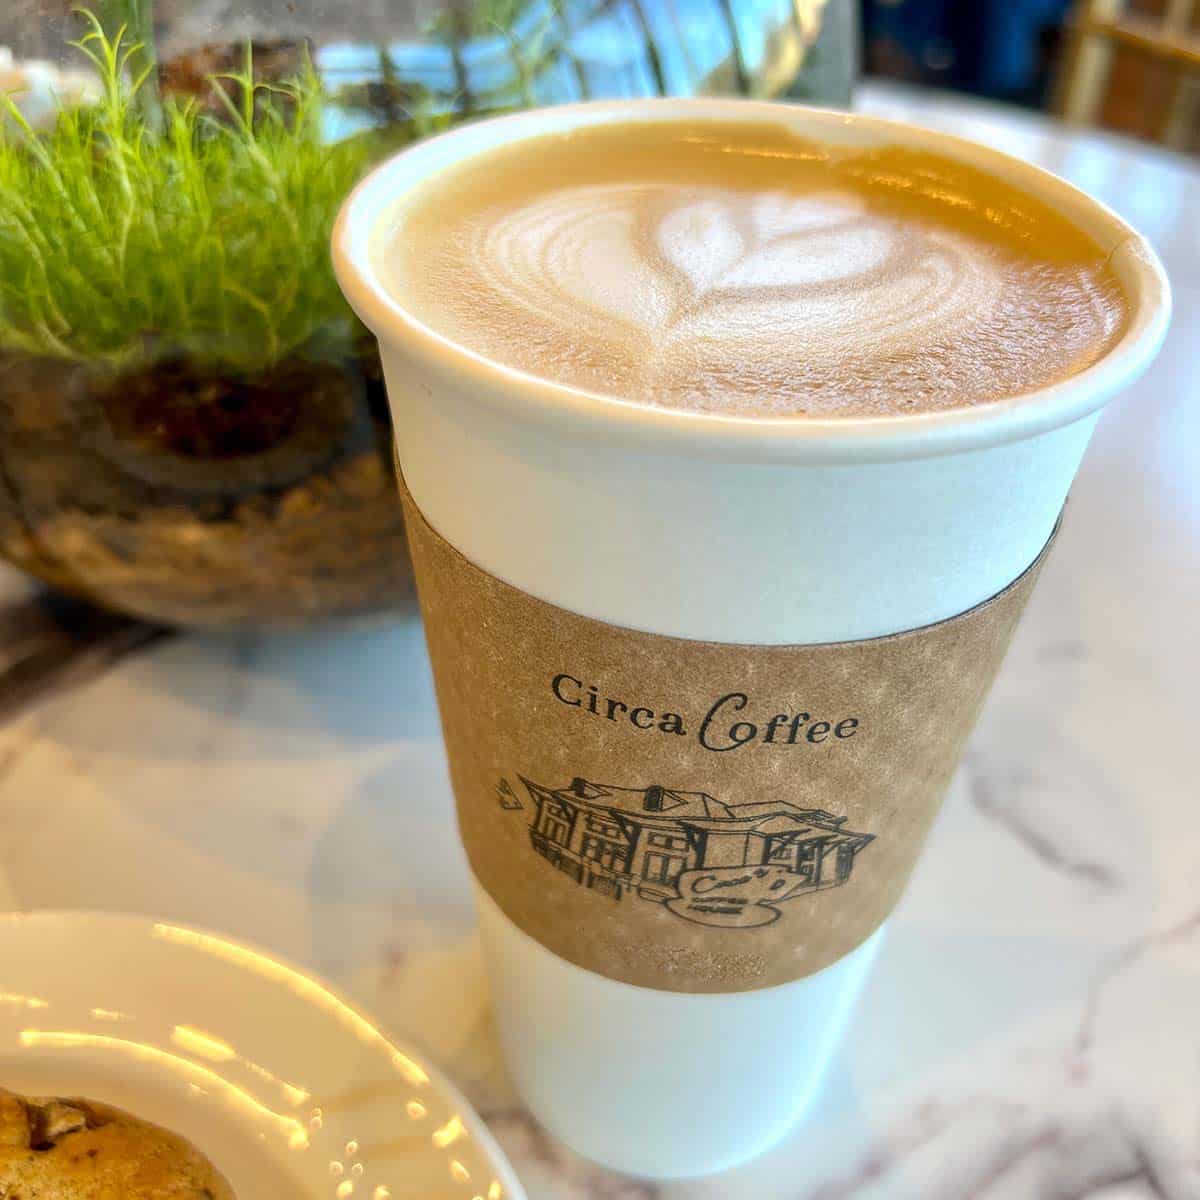 Latte art at Circa Coffee in LaGrange, Georgia.